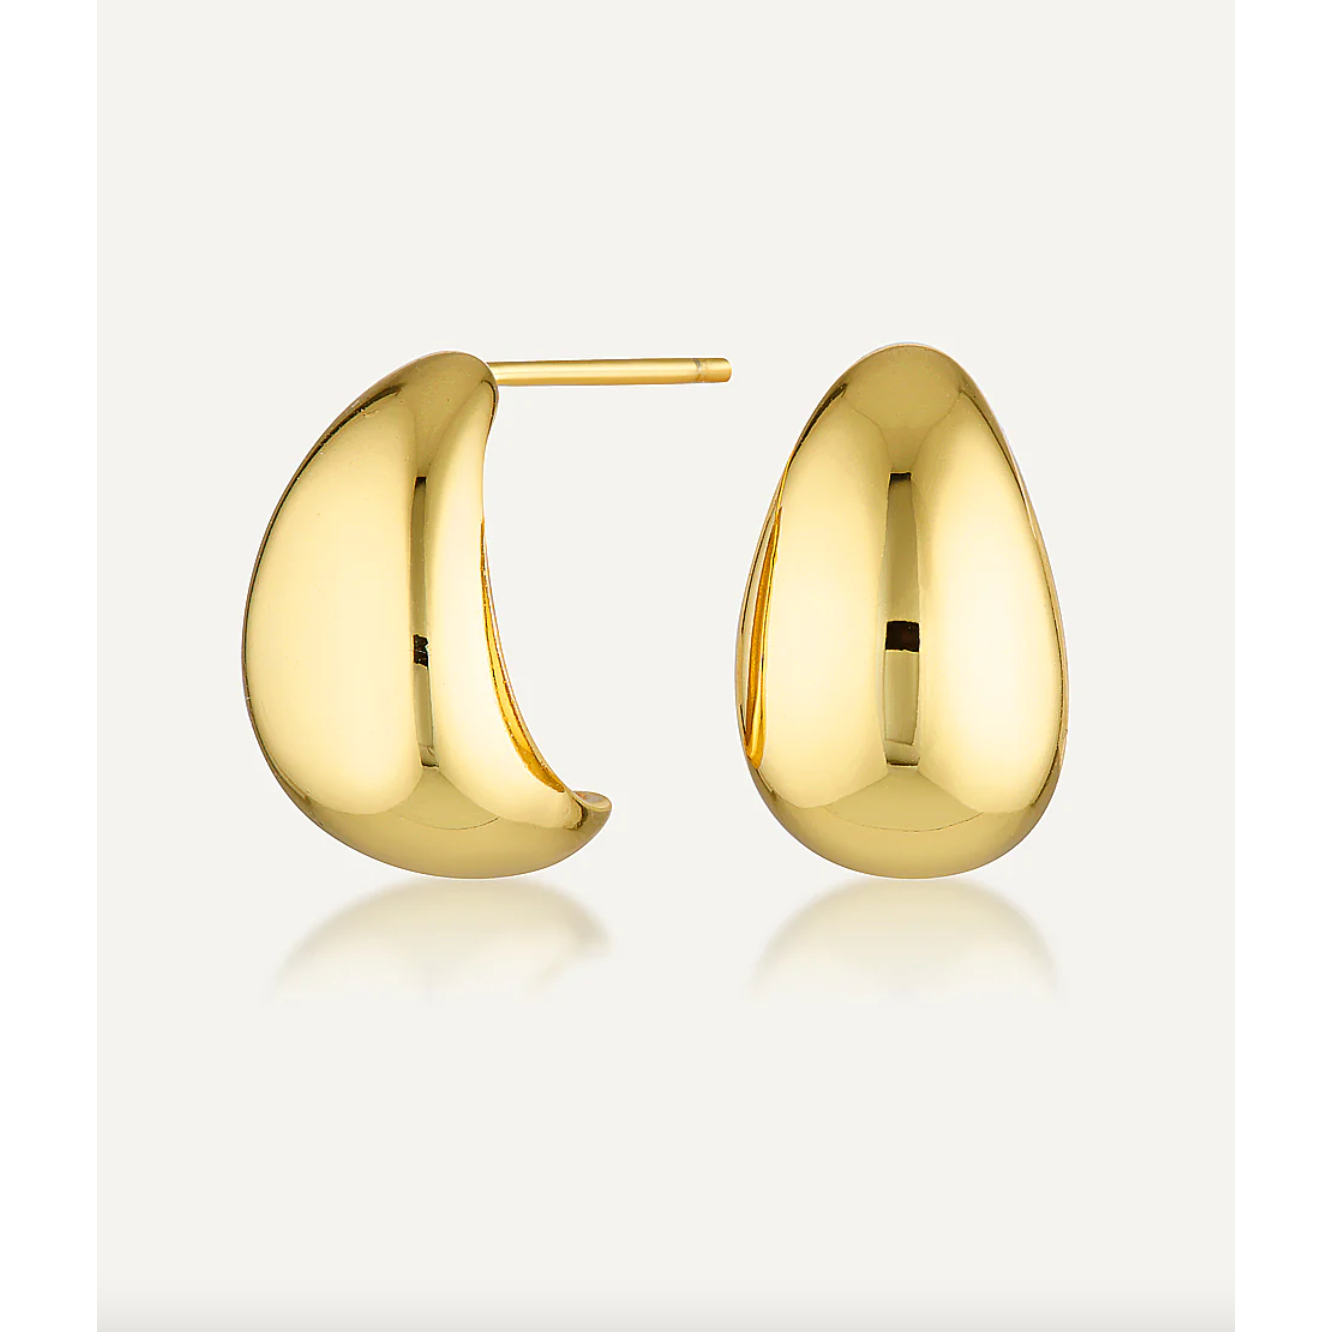 Avant Studio Noemi Earrings - Gold